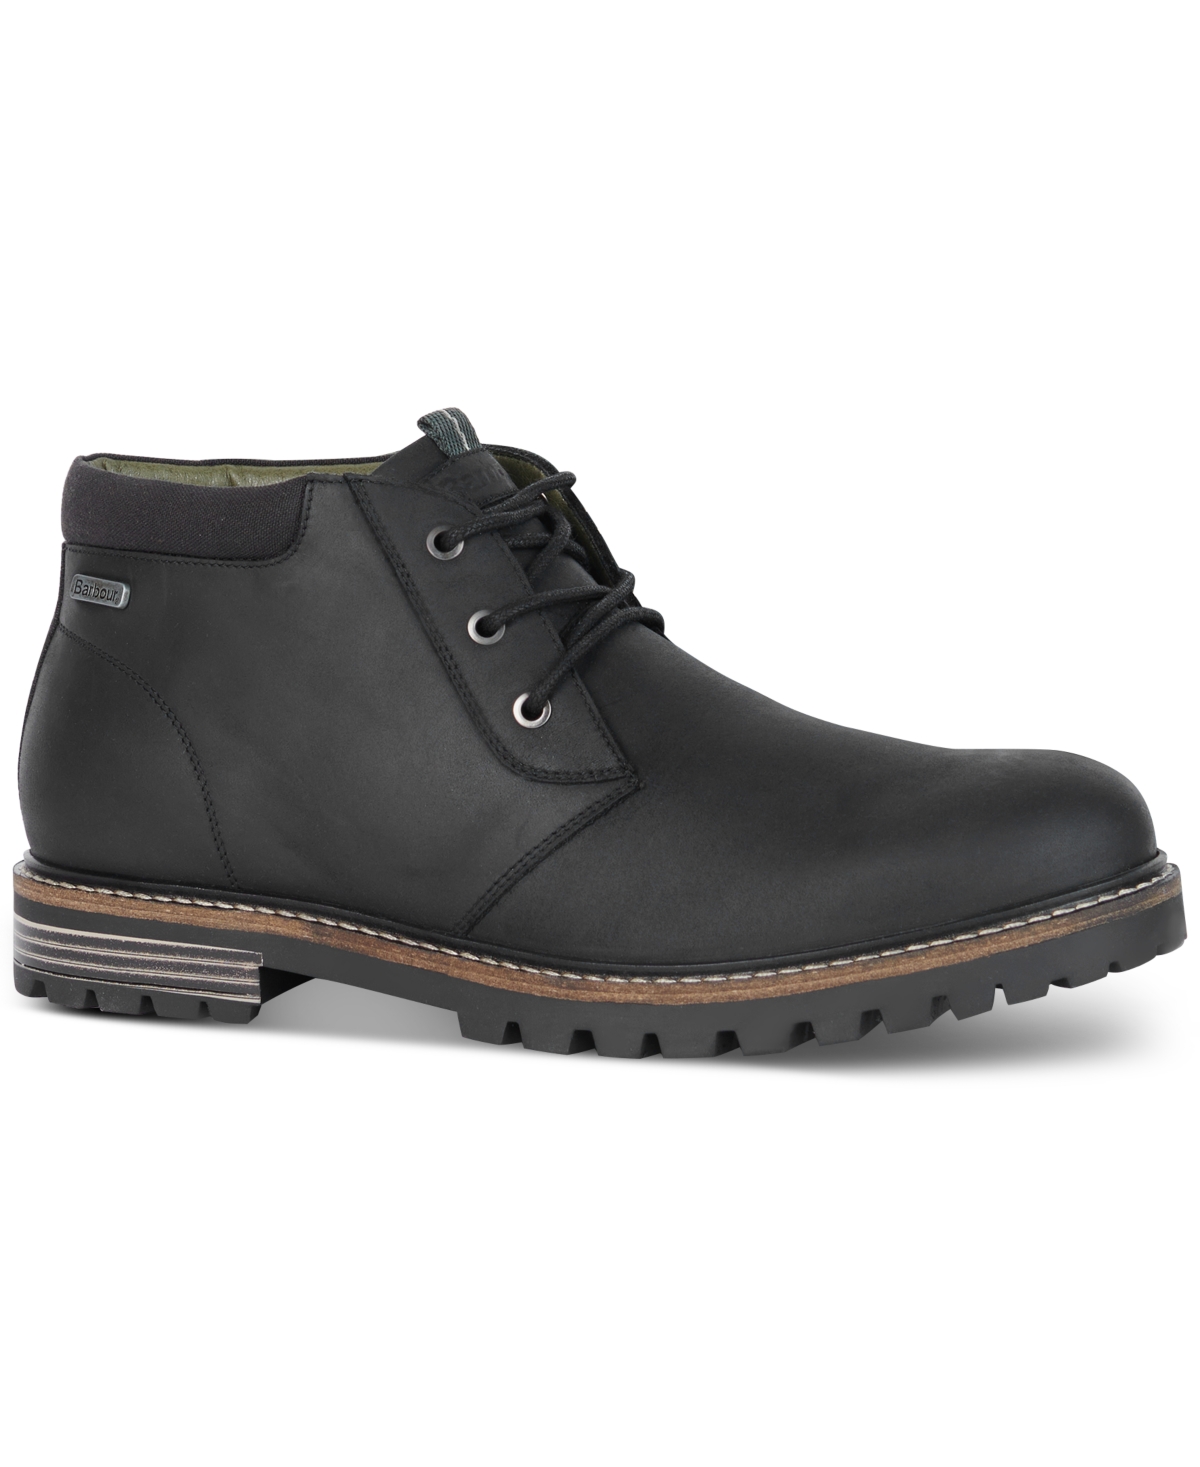 Men's Boulder Leather Chukka Boots - Black